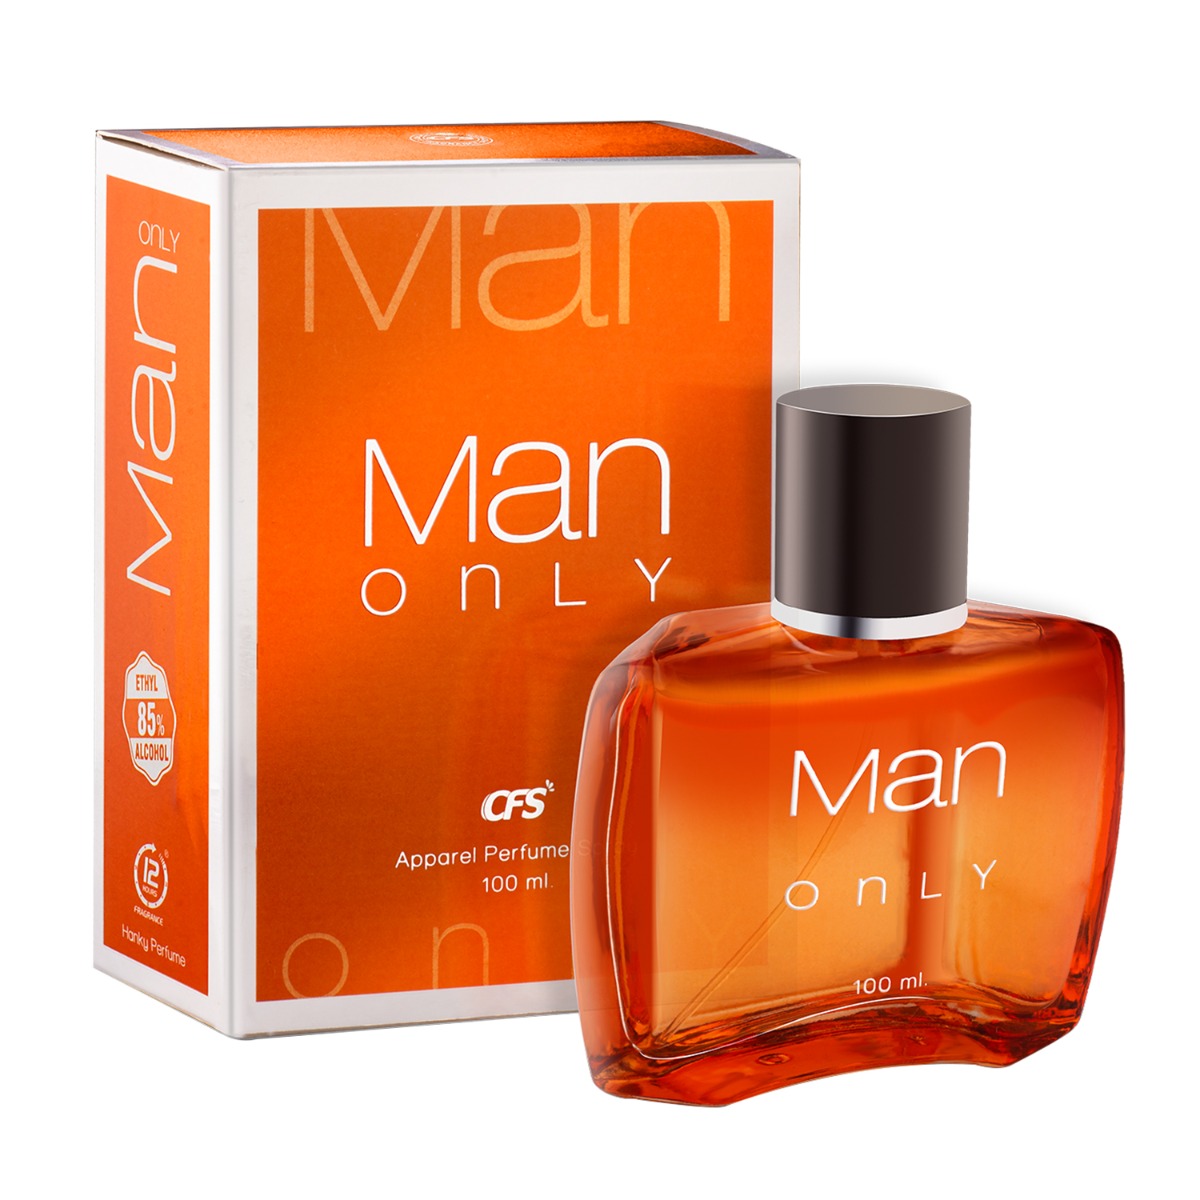 CFS Man Only Copper Long Lasting Apparel Perfume Spray, 100ml